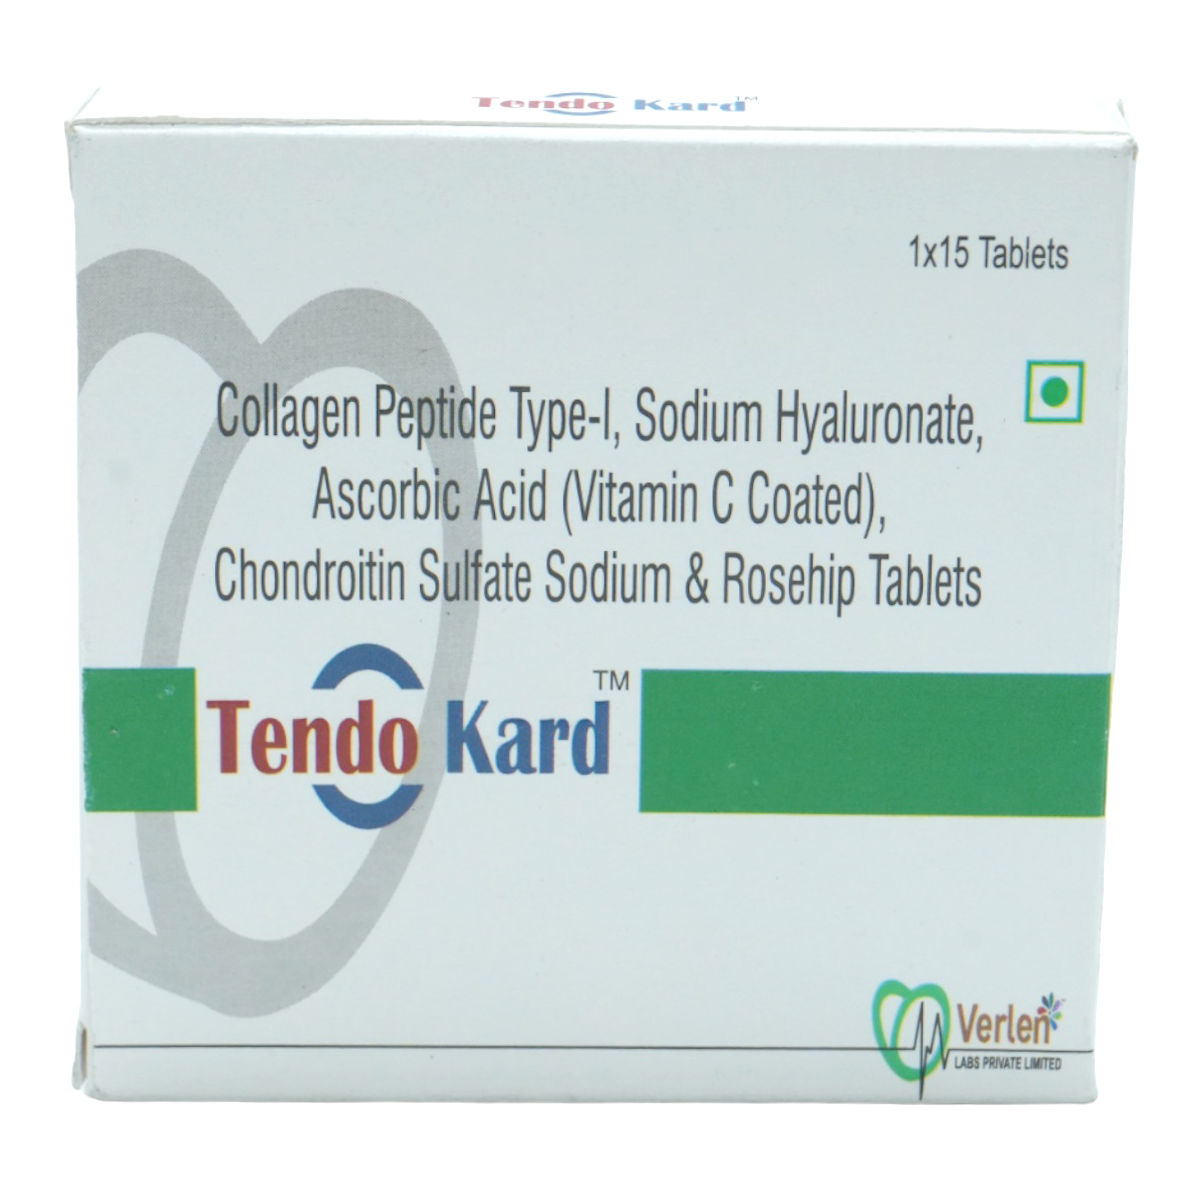 Tendo Kard Tablet 15's, Pack of 15 S